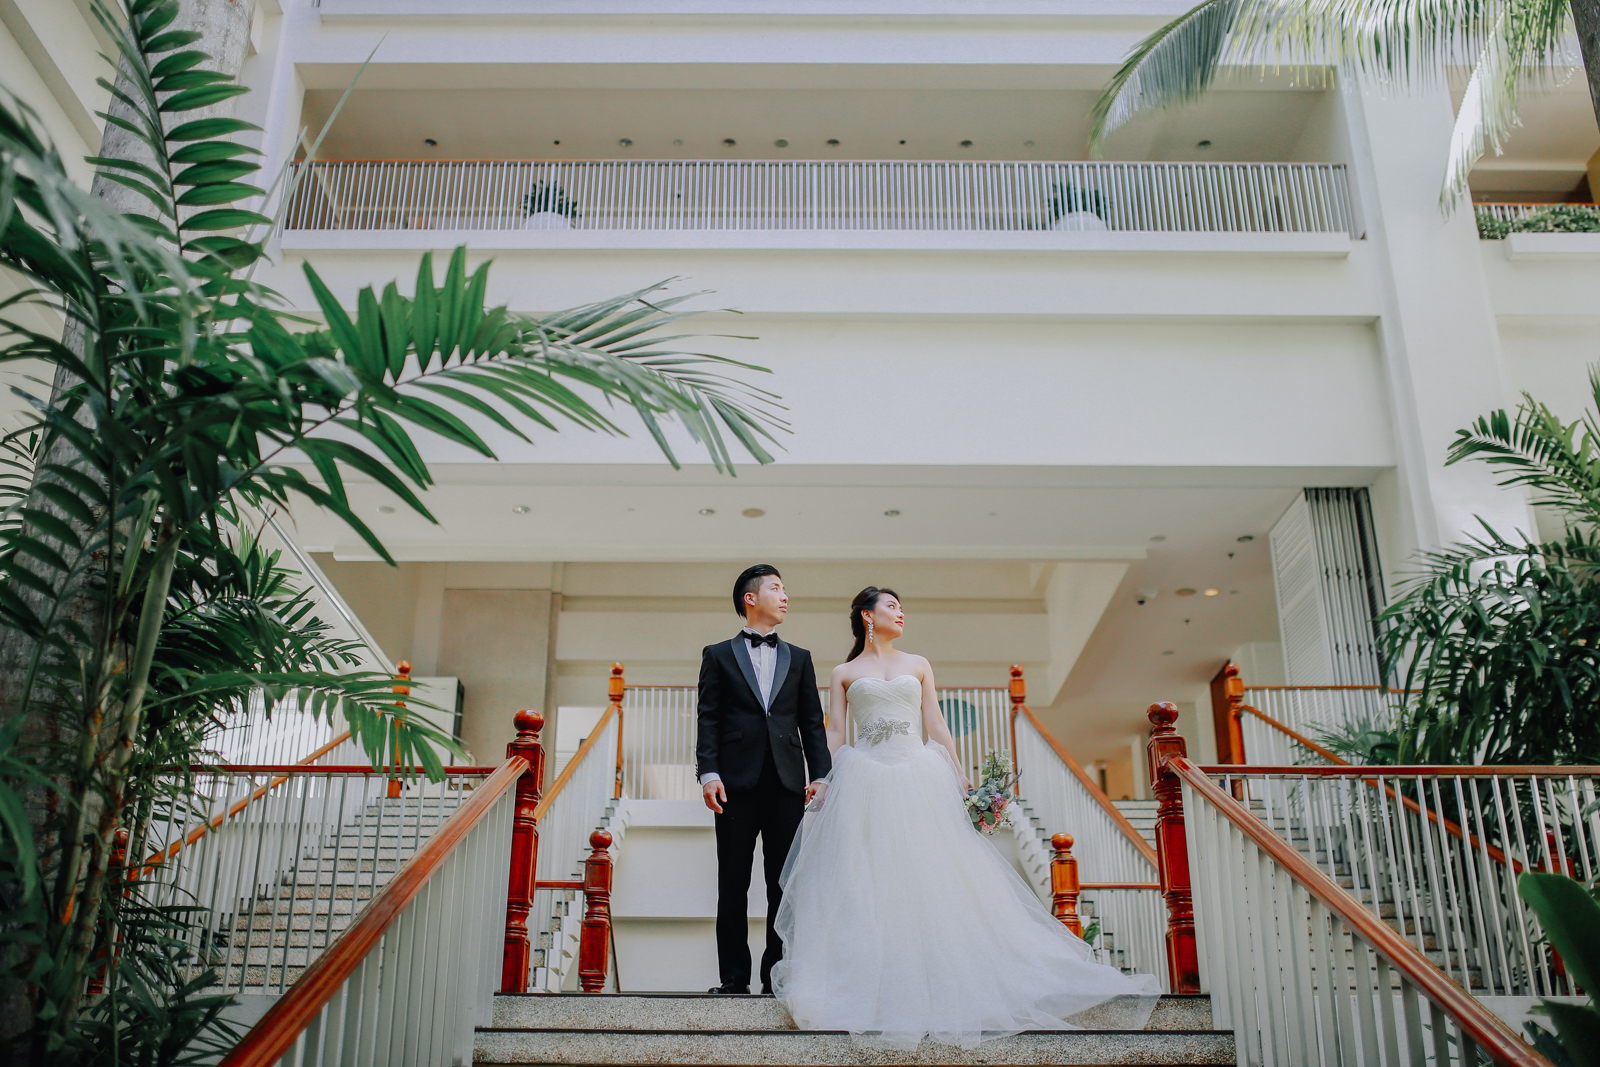 ctp 2 6 - Shojiro & Hiroko's Shangrila Mactan Cebu Intimate Wedding